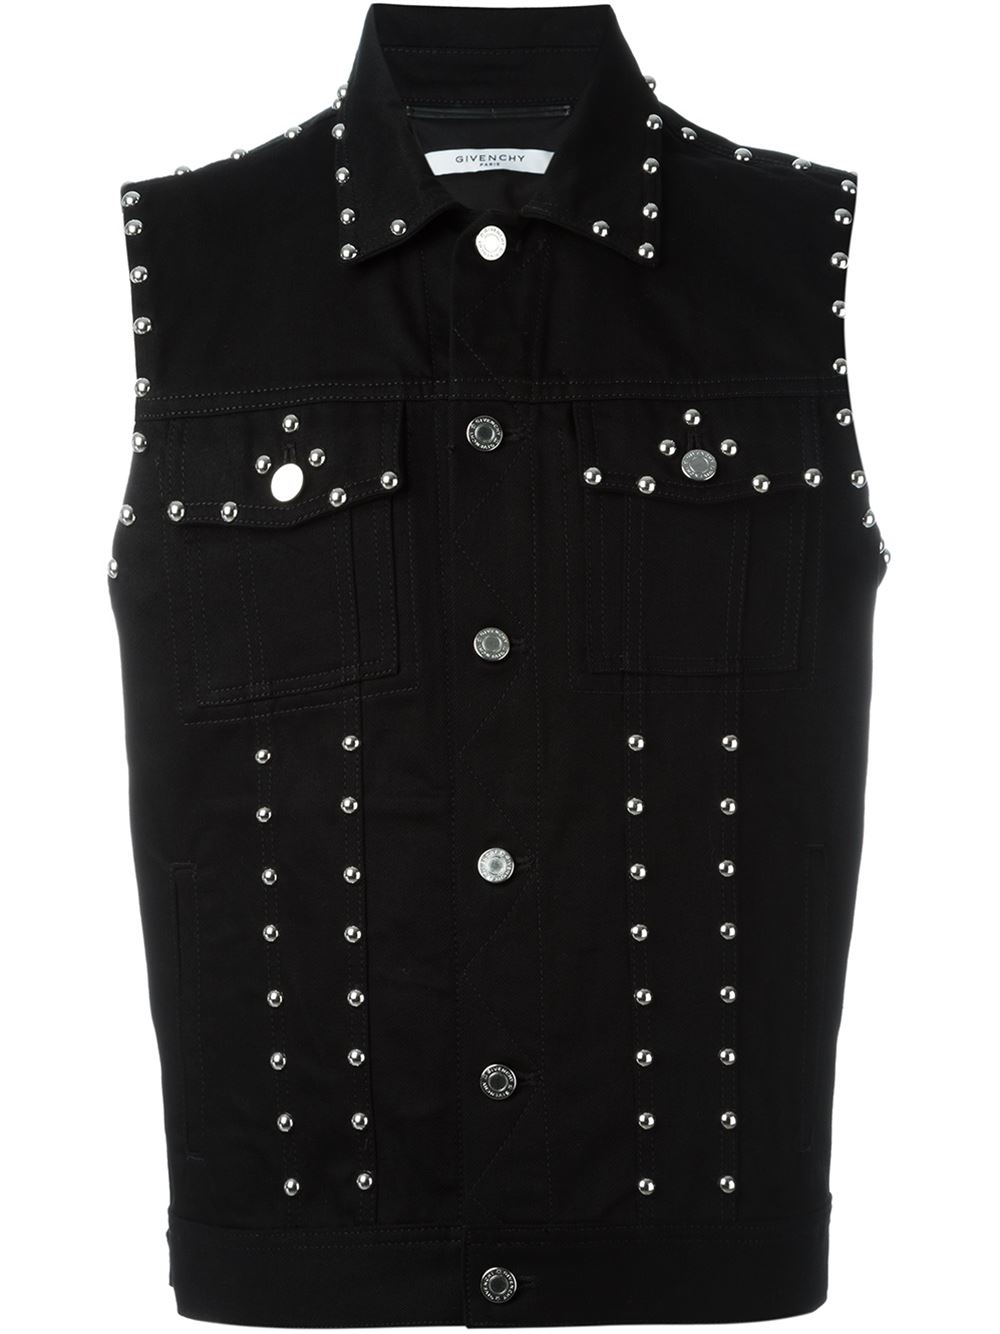 Lyst - Givenchy Sleeveless Studded Denim Jacket in Black for Men